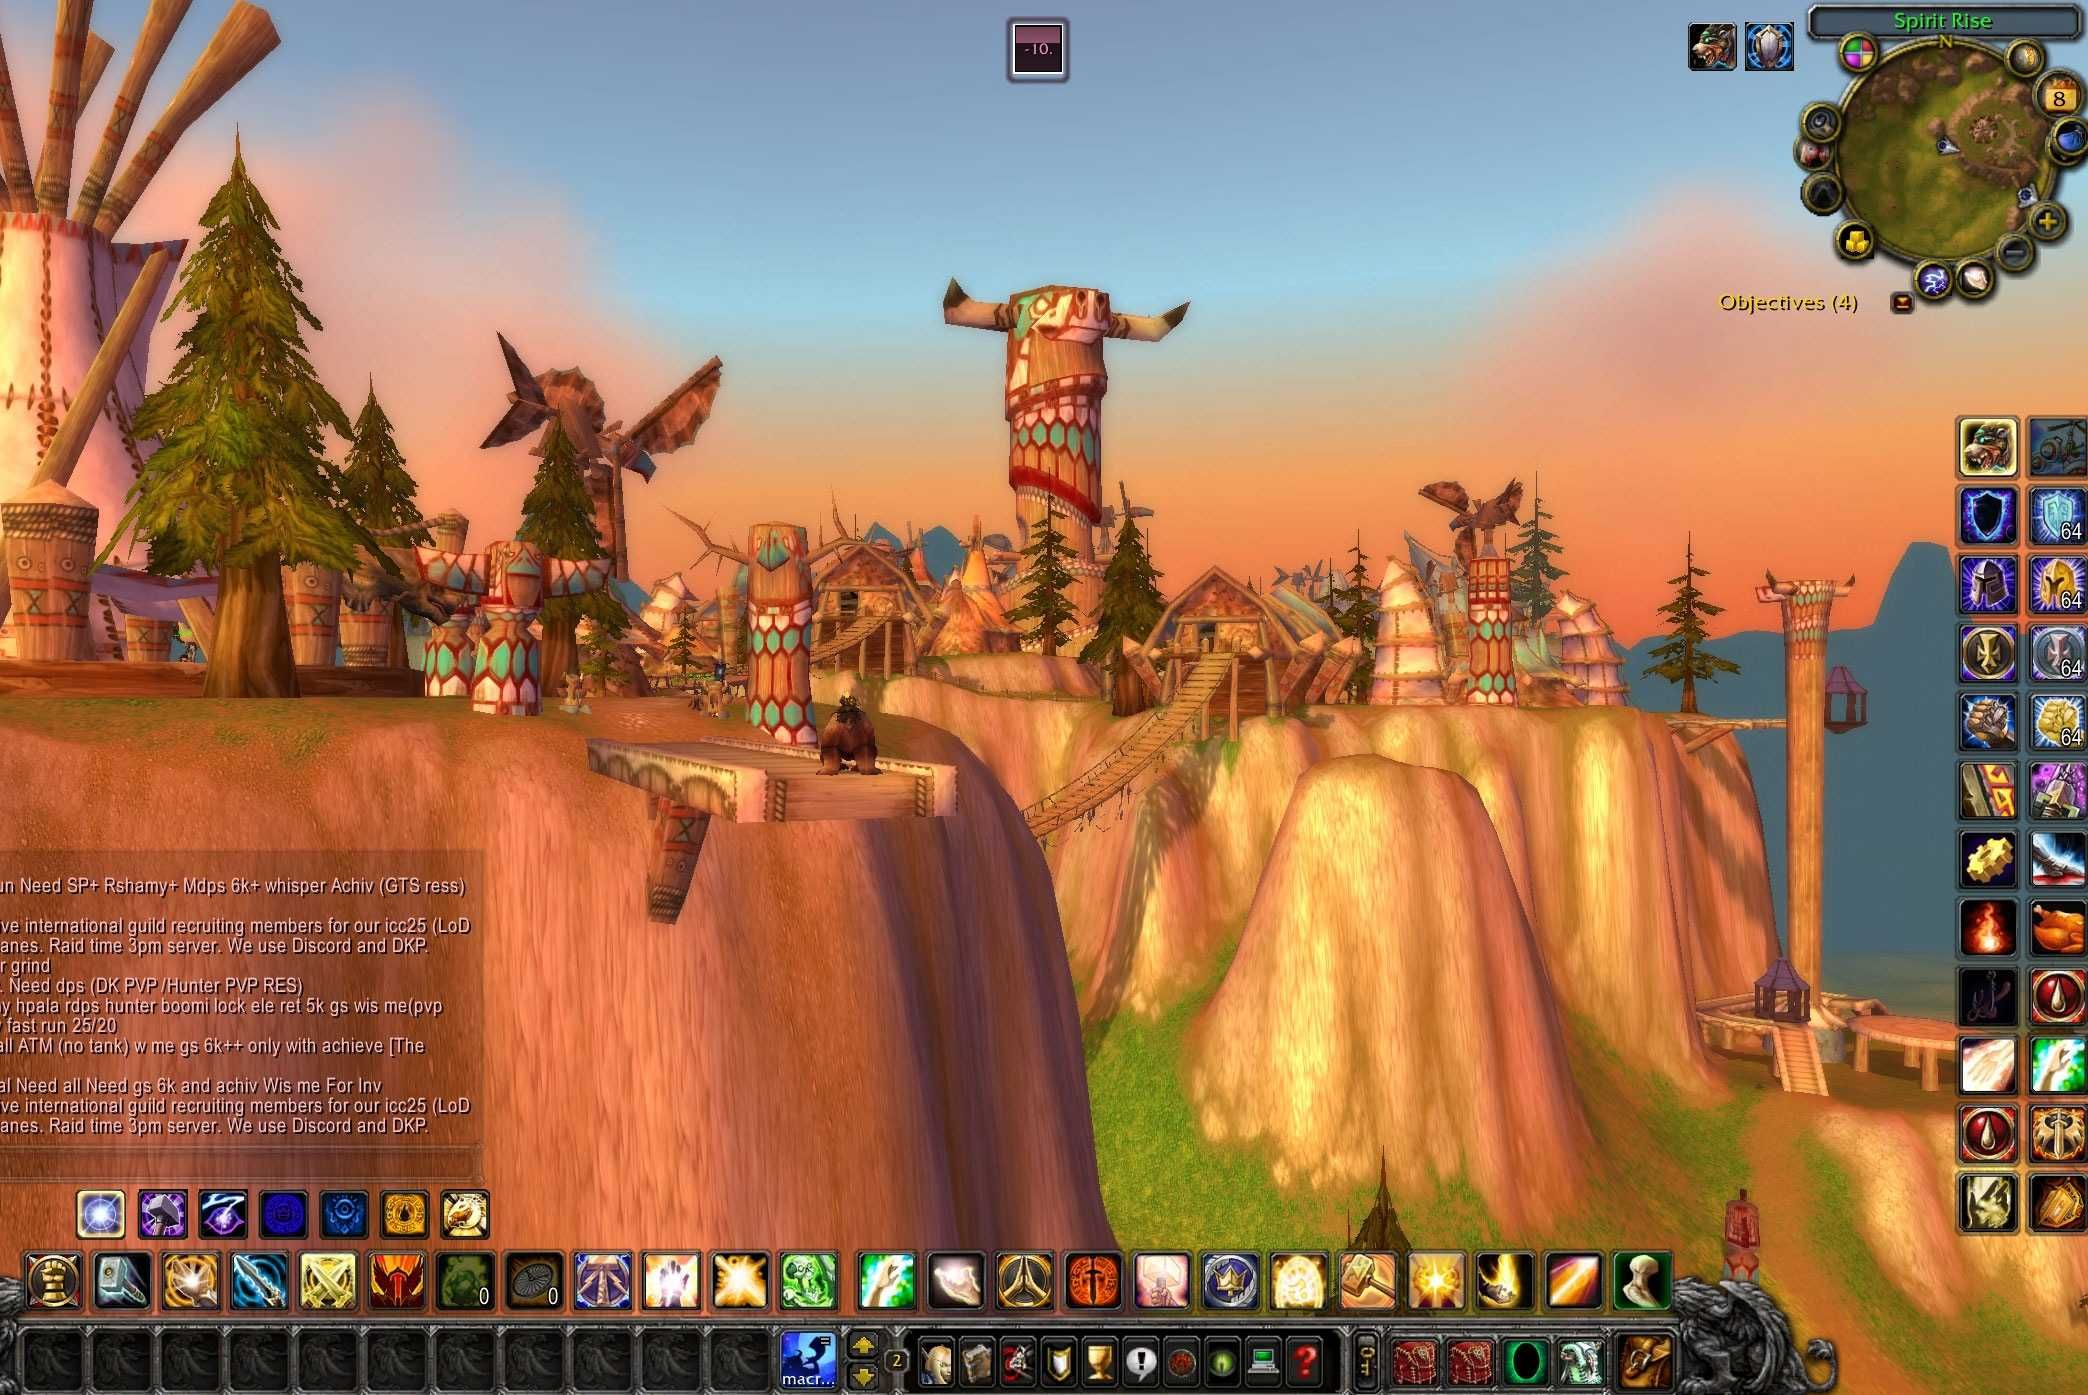 Totem nativ american maya lemn cadou vintage Warcraft decor monitor